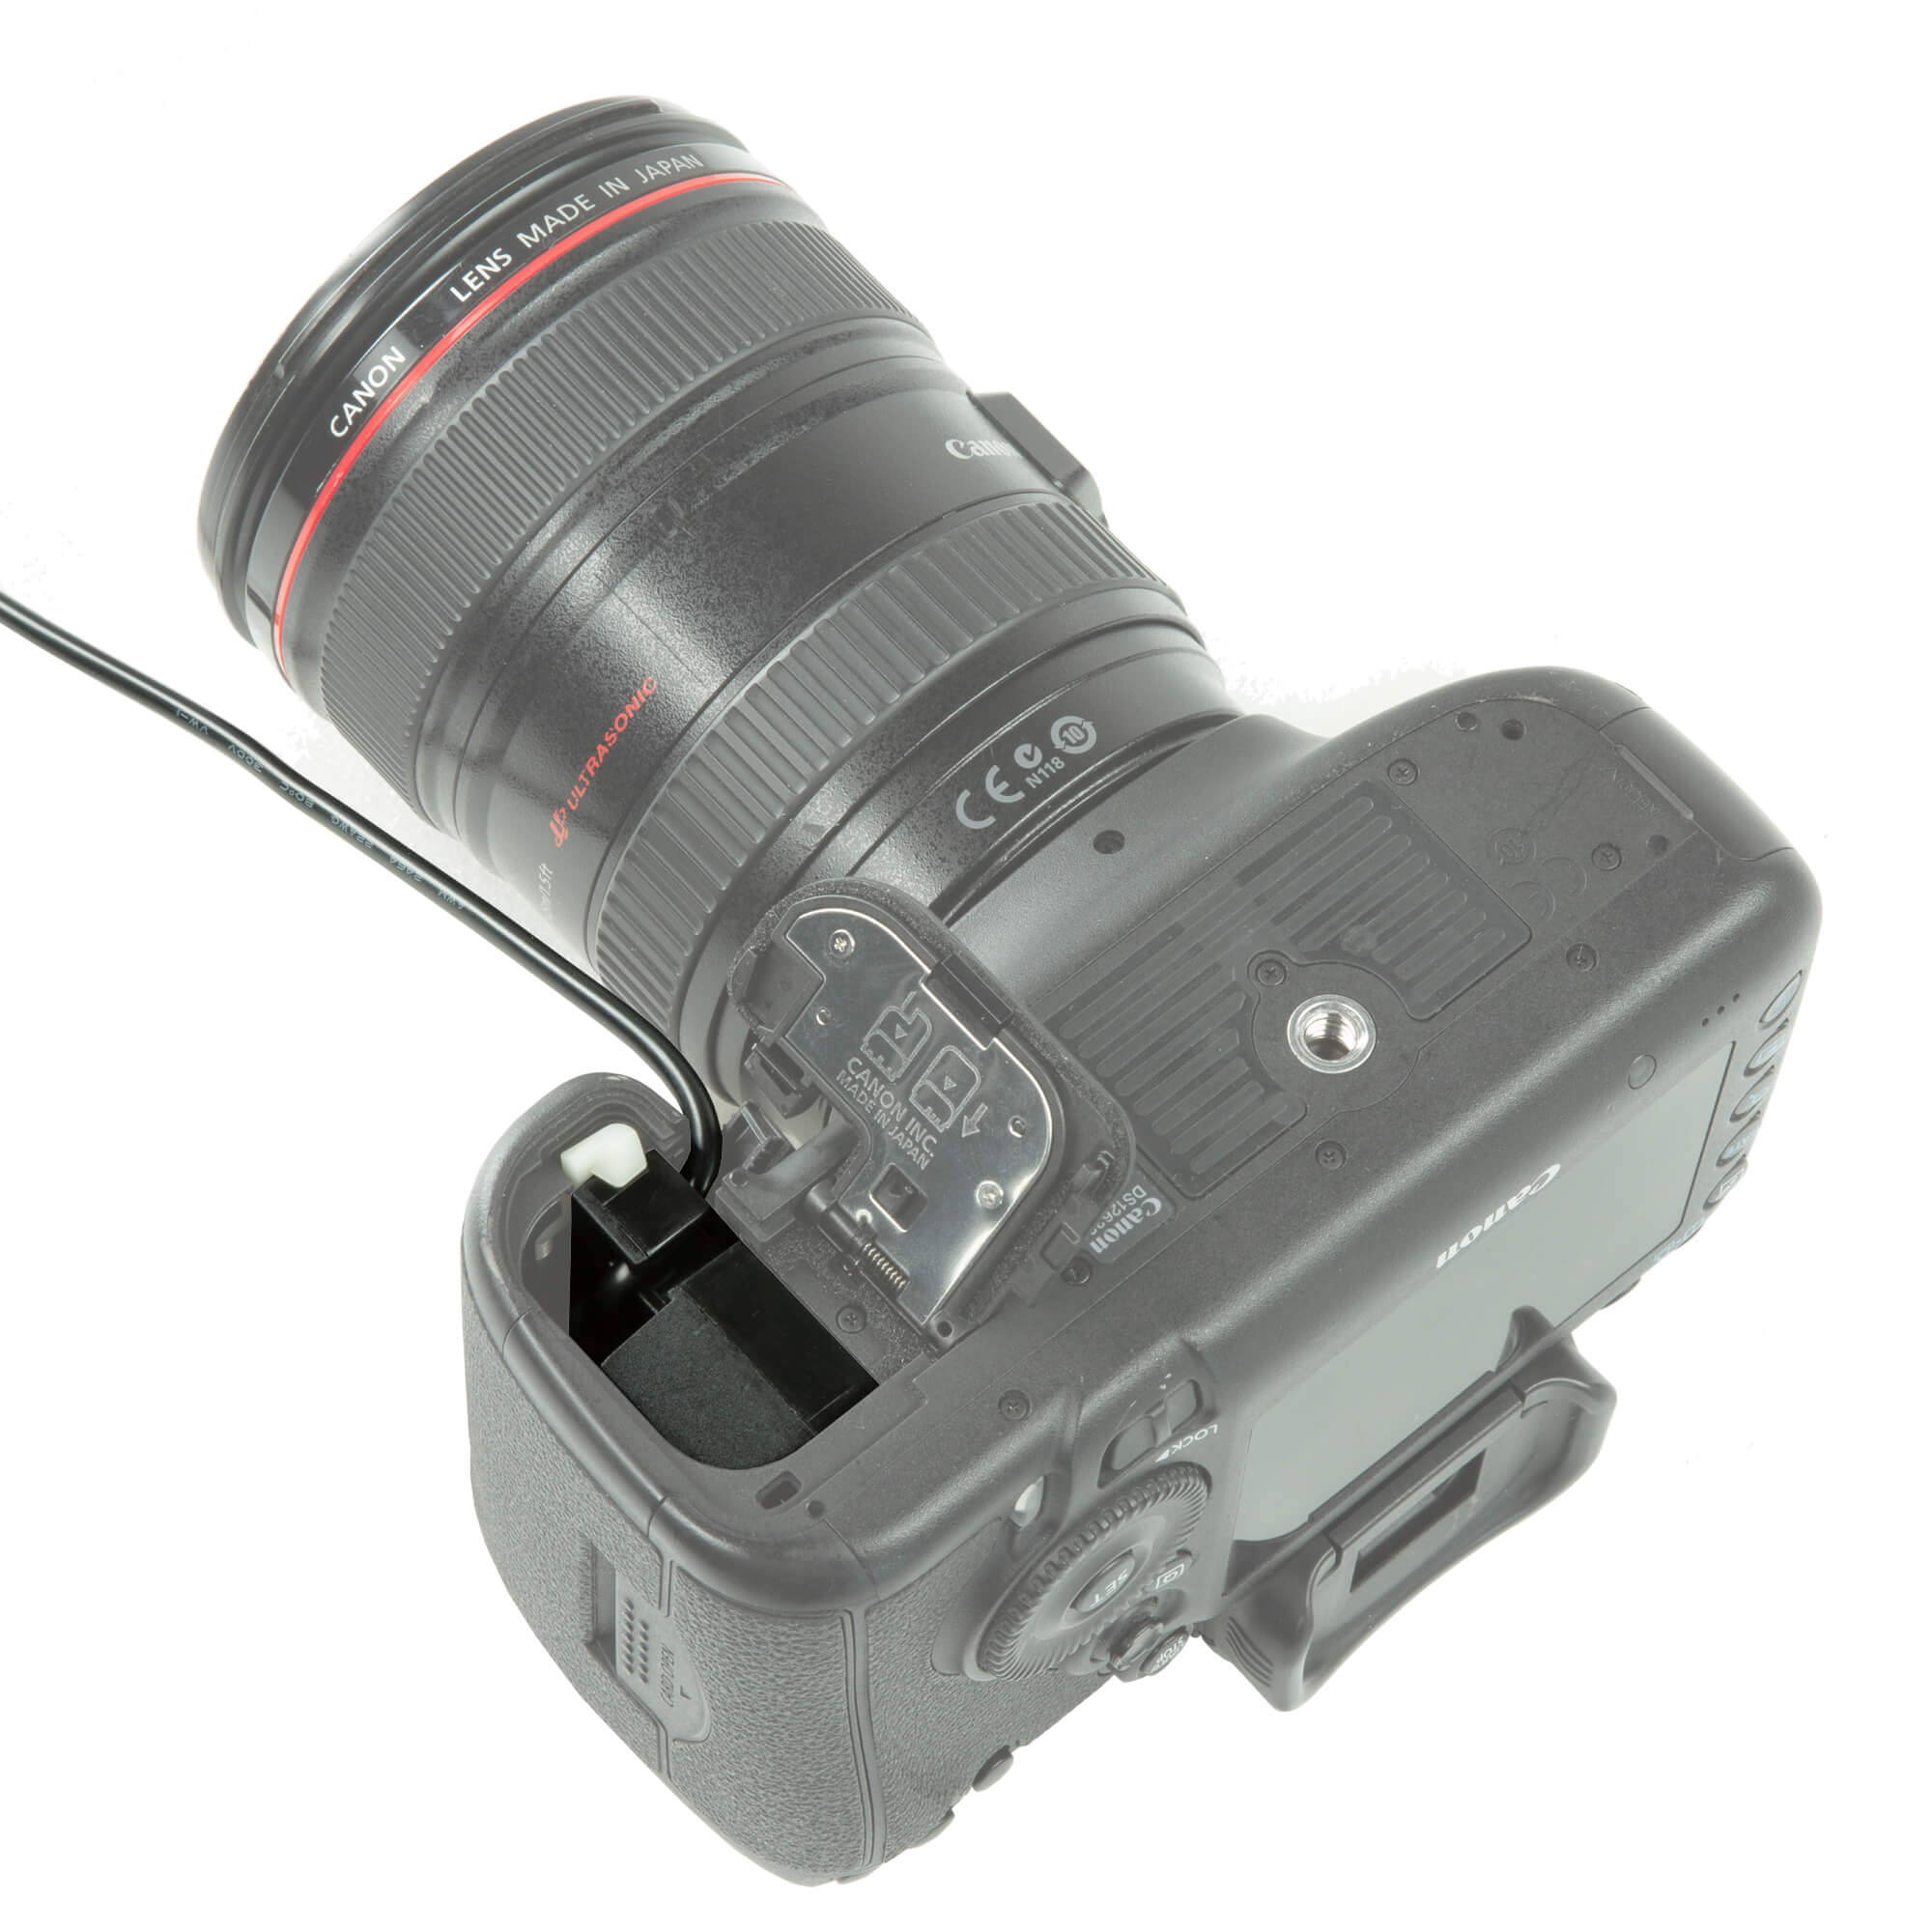 SHAPE J-Box Camera Power and Charger for Canon 5D/7D, Blackmagic Pocket Cinema 4K/6K/LP-E6 Series - SHAPE wlb